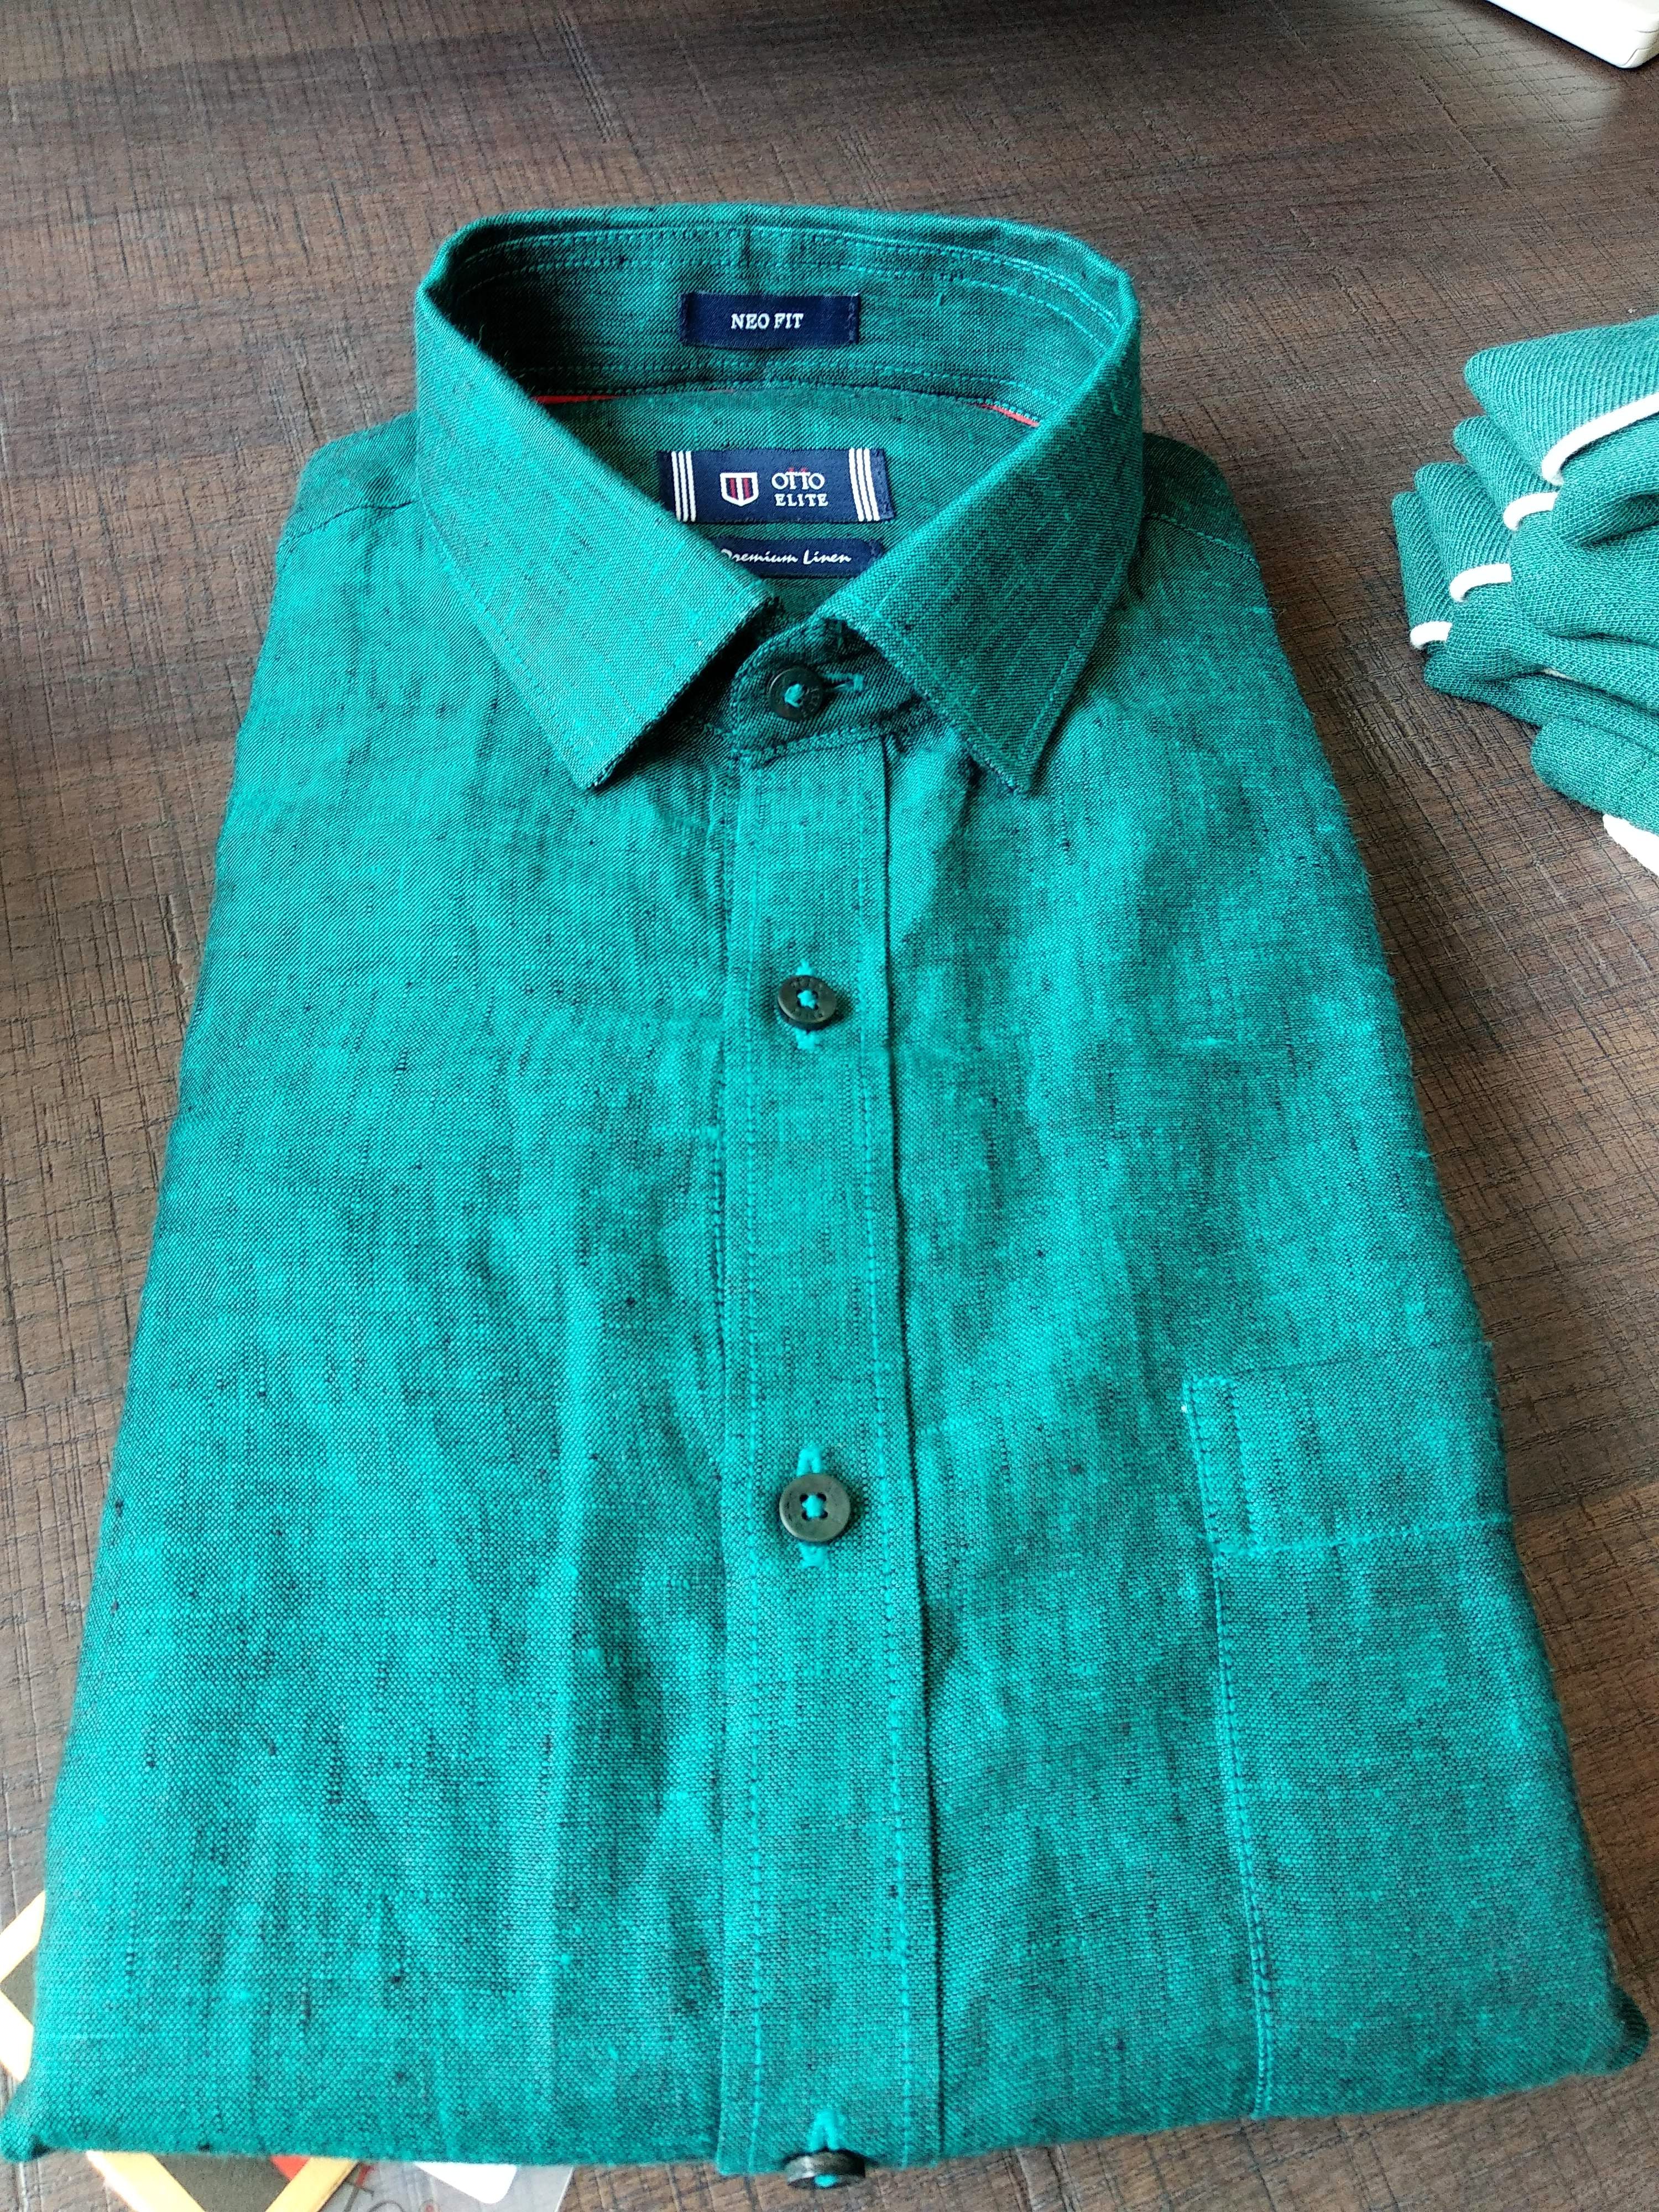 Clothing,Aqua,Turquoise,Green,Sleeve,Blue,Collar,Teal,Shirt,Outerwear